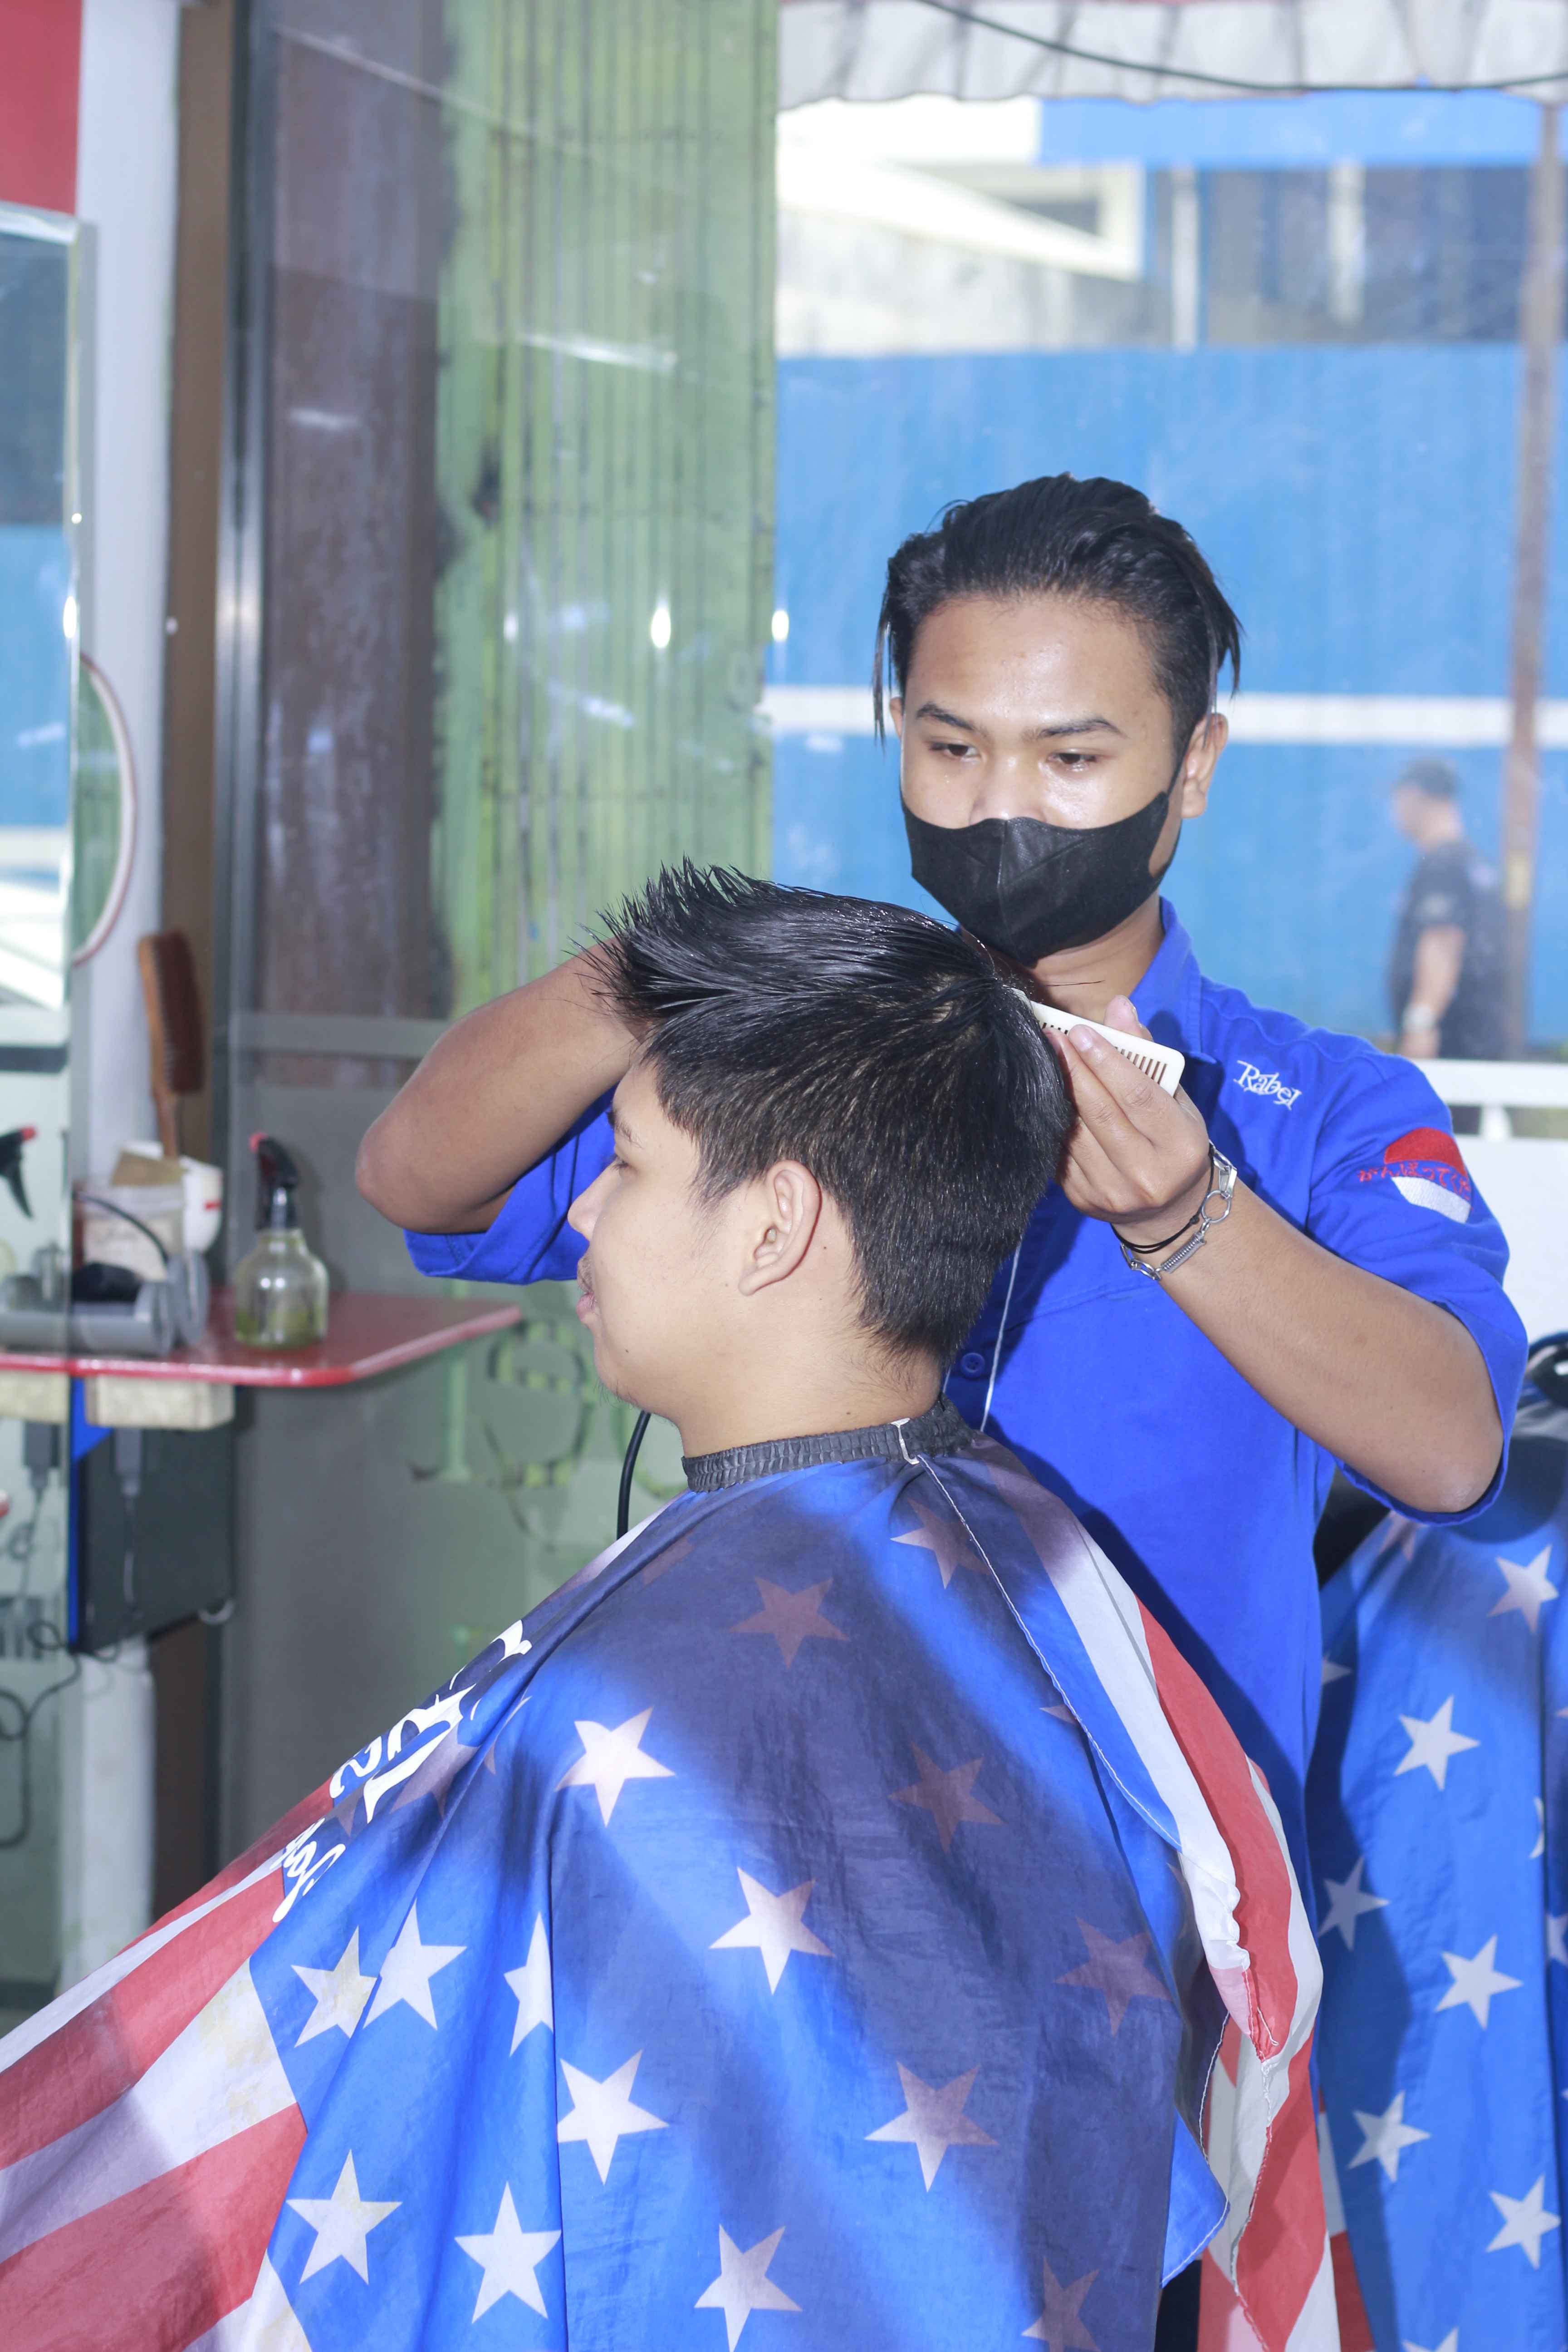 Harga Potong Rambut Di Kelurahan Karangbesuki Profesional